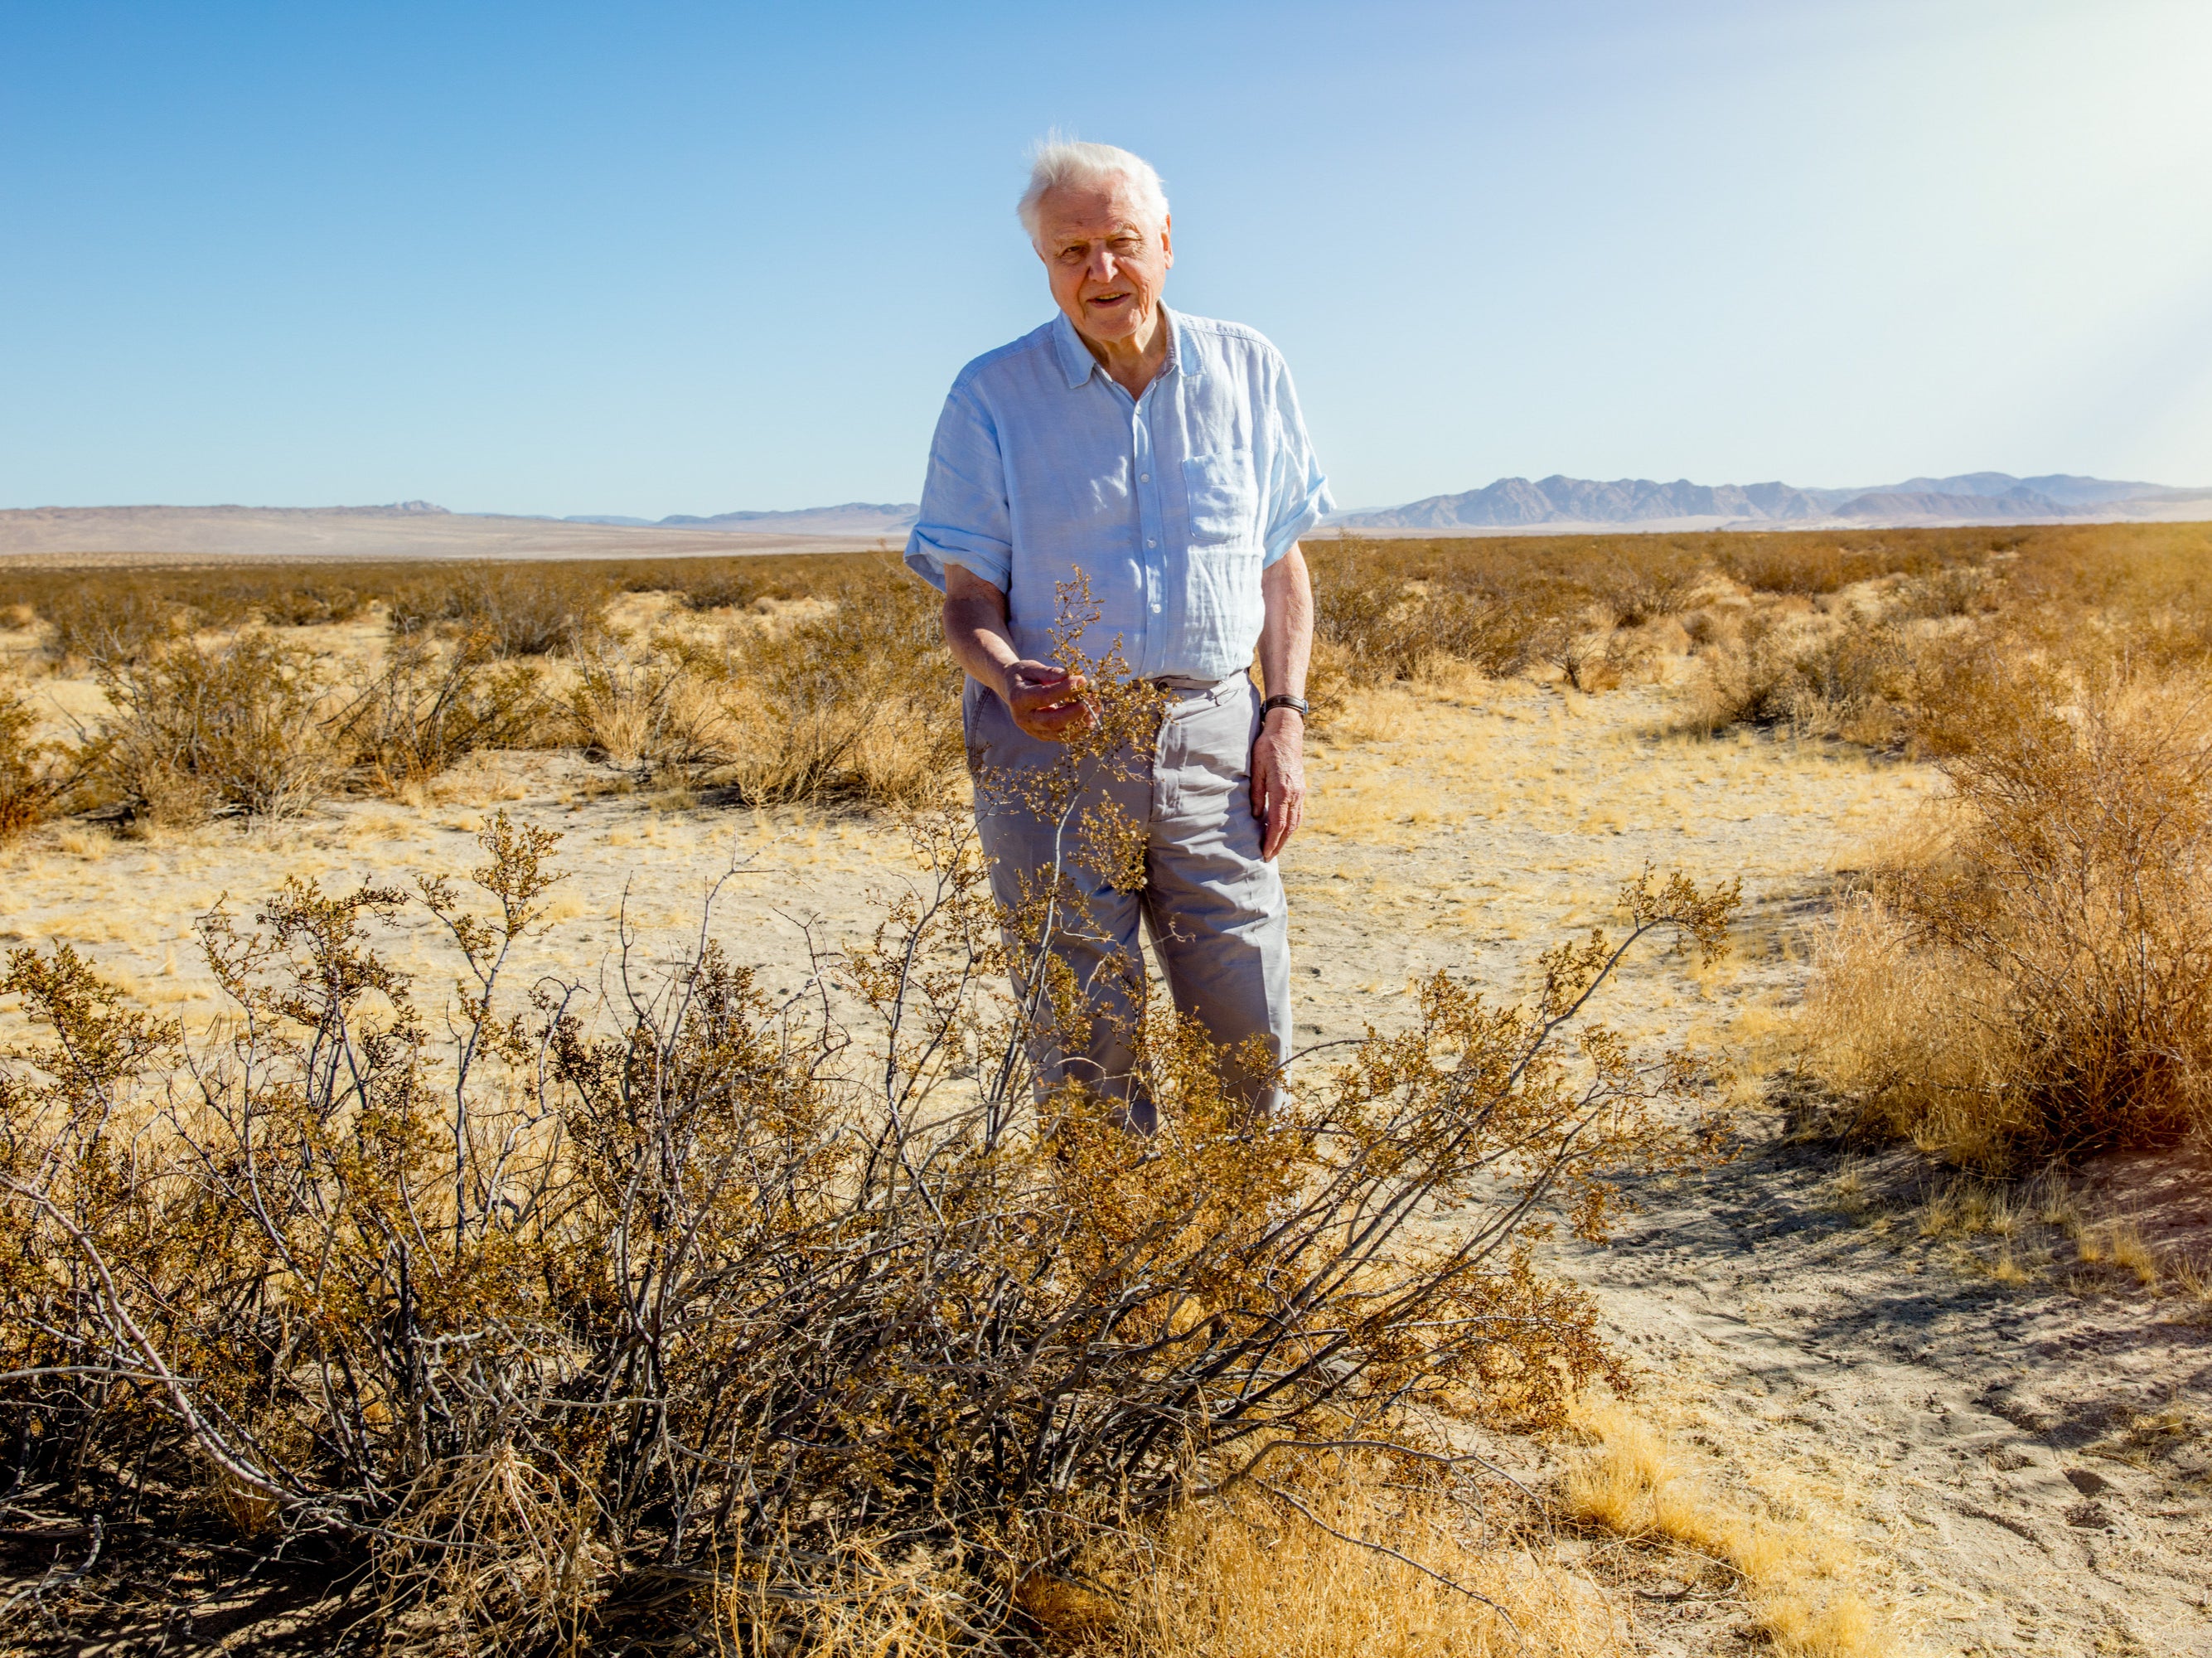 Sir David Attenborough standing next to an ancient creosote bush